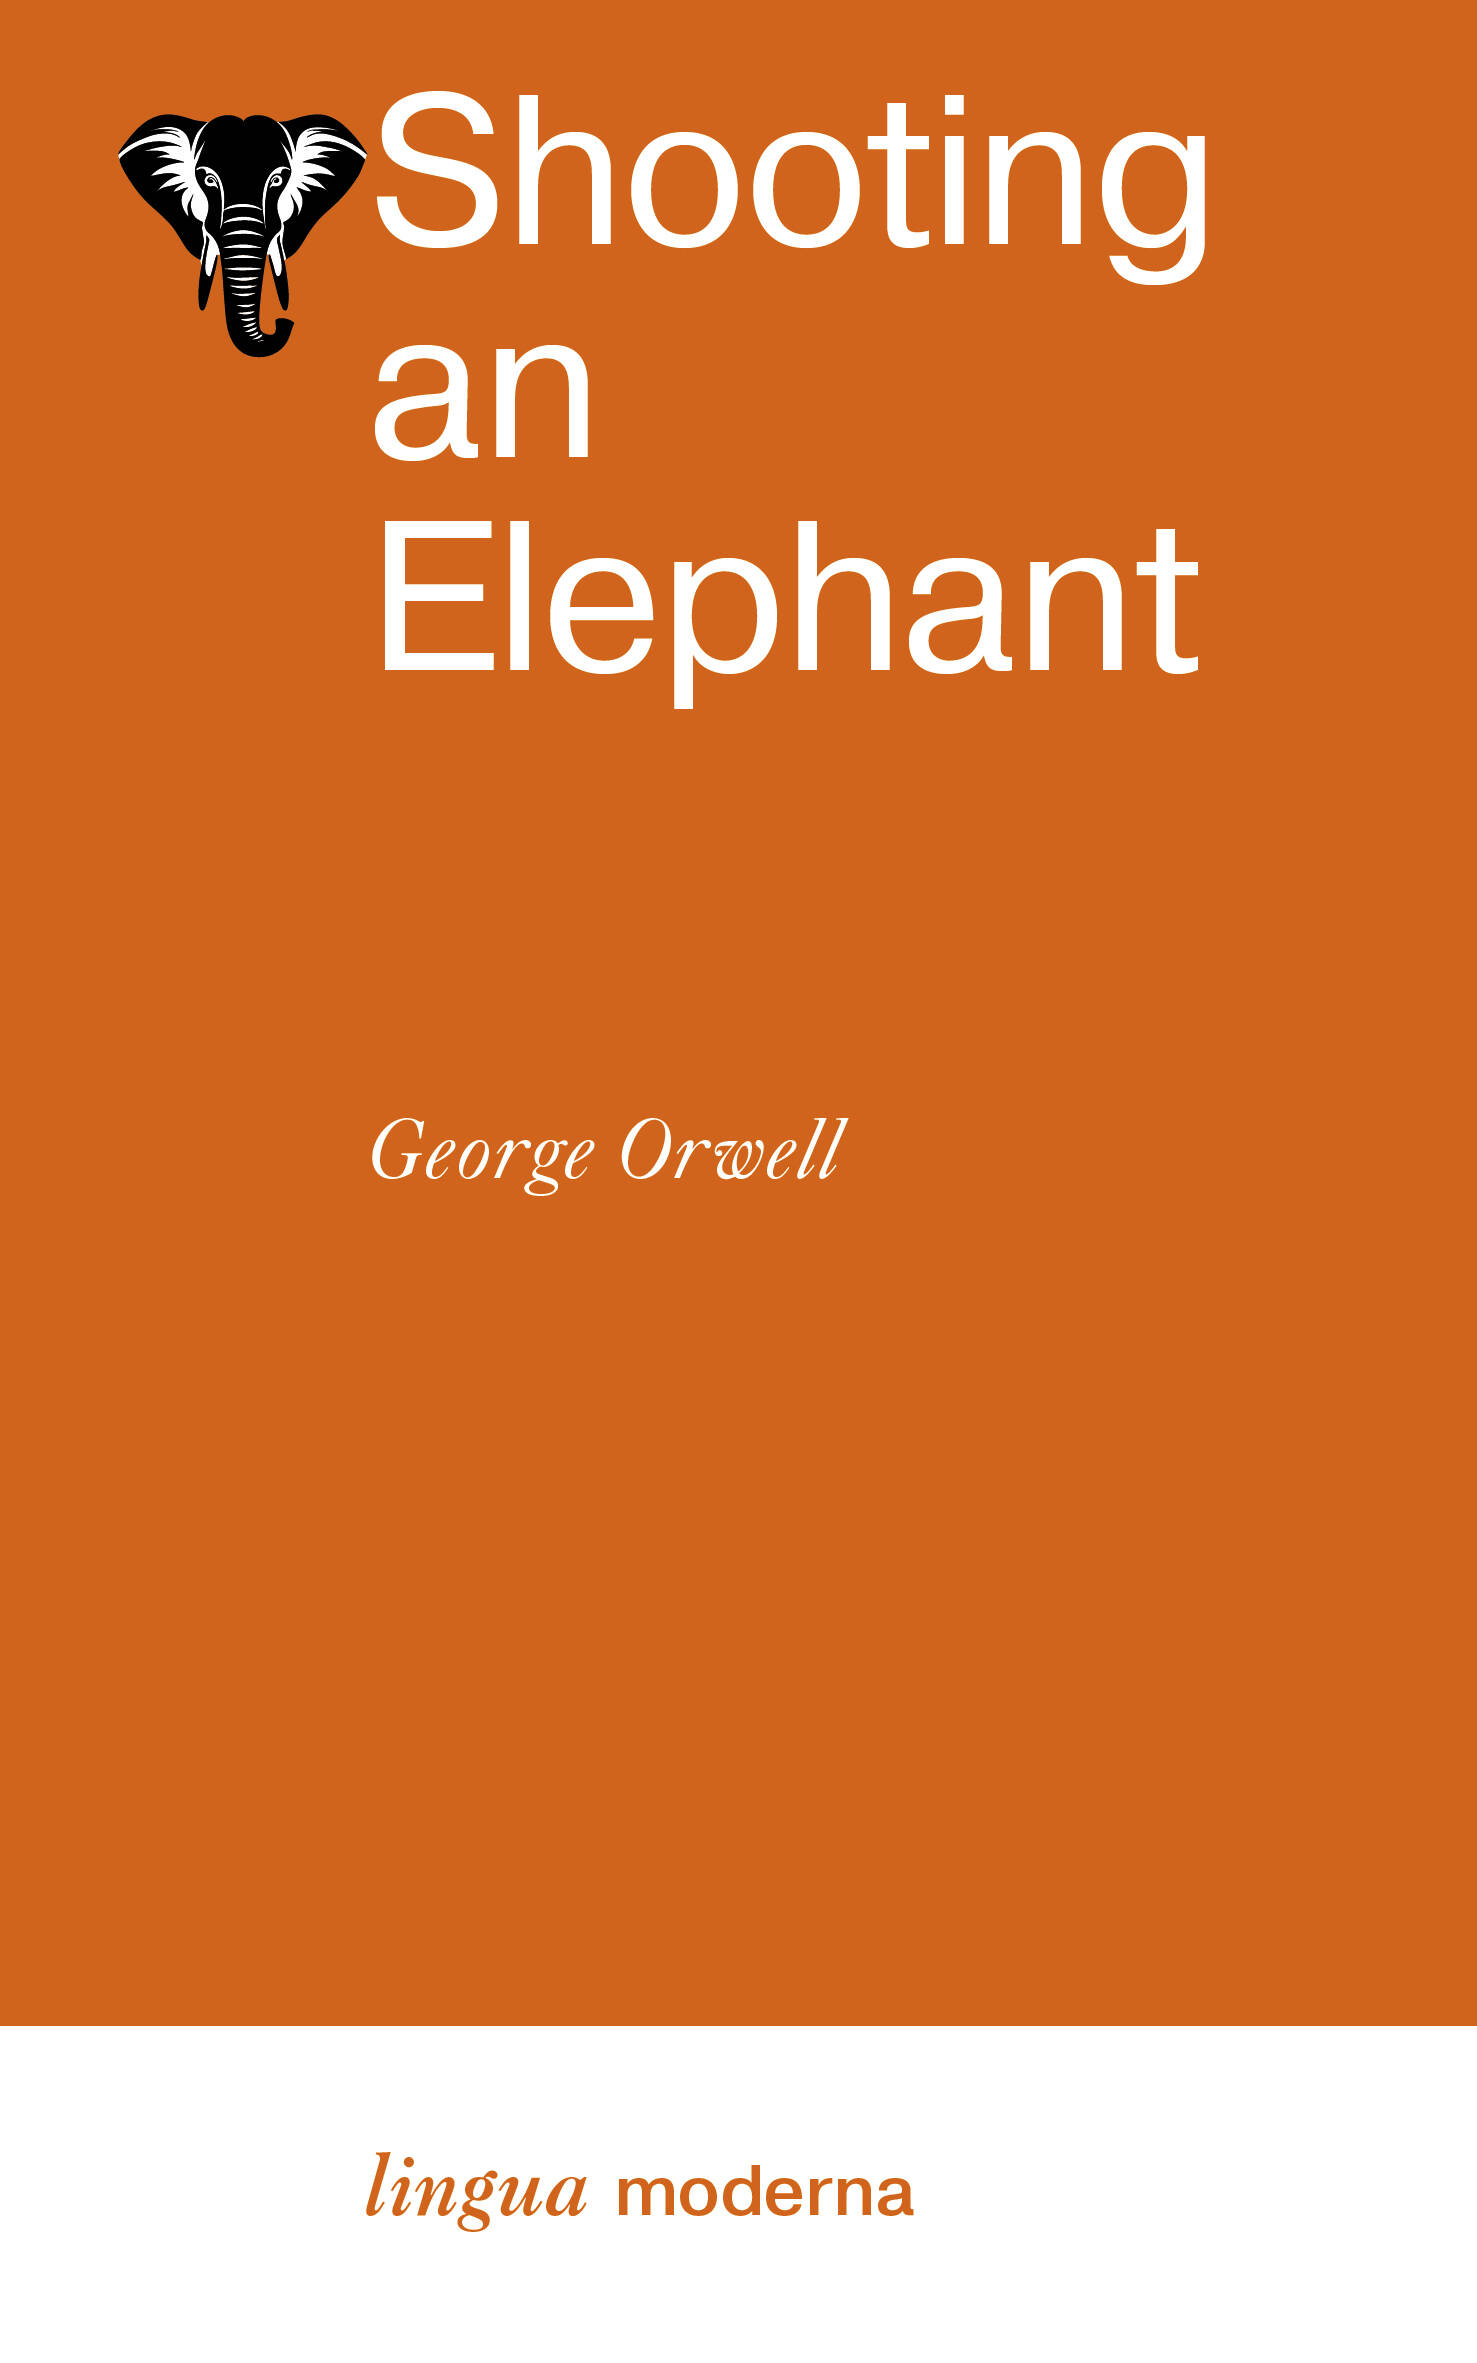 orwell george shooting an elephant Shooting an Elephant